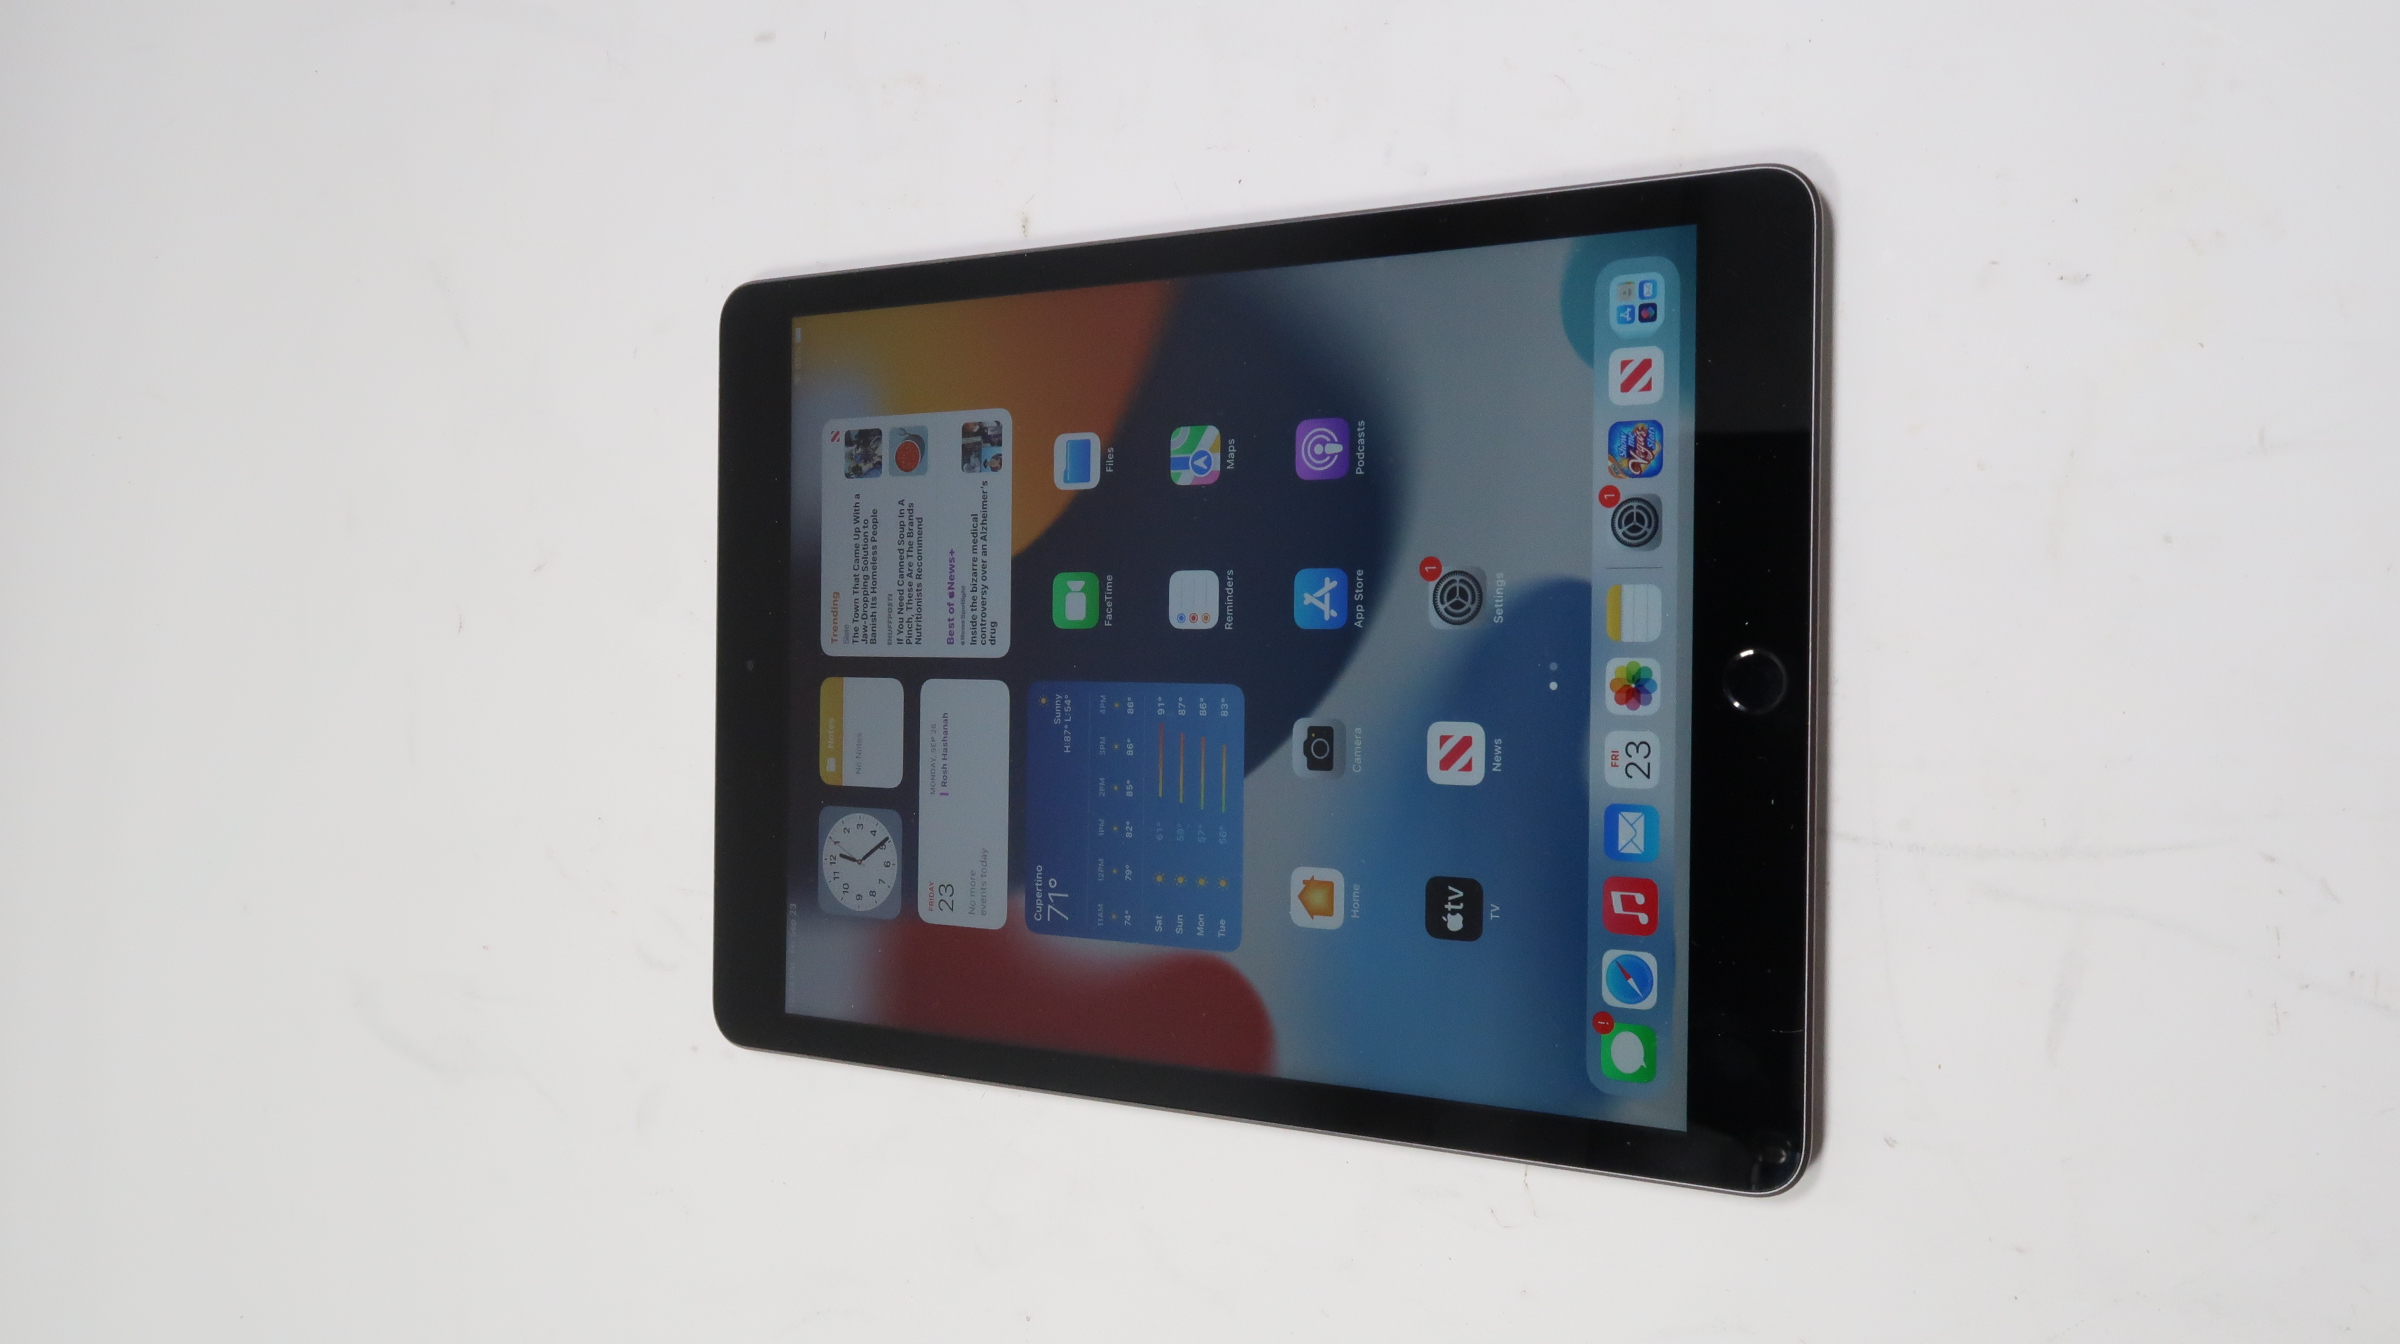 Apple iPad MW742ll/A (7th Gen) Space Grey Wi-Fi 32GB Tablet